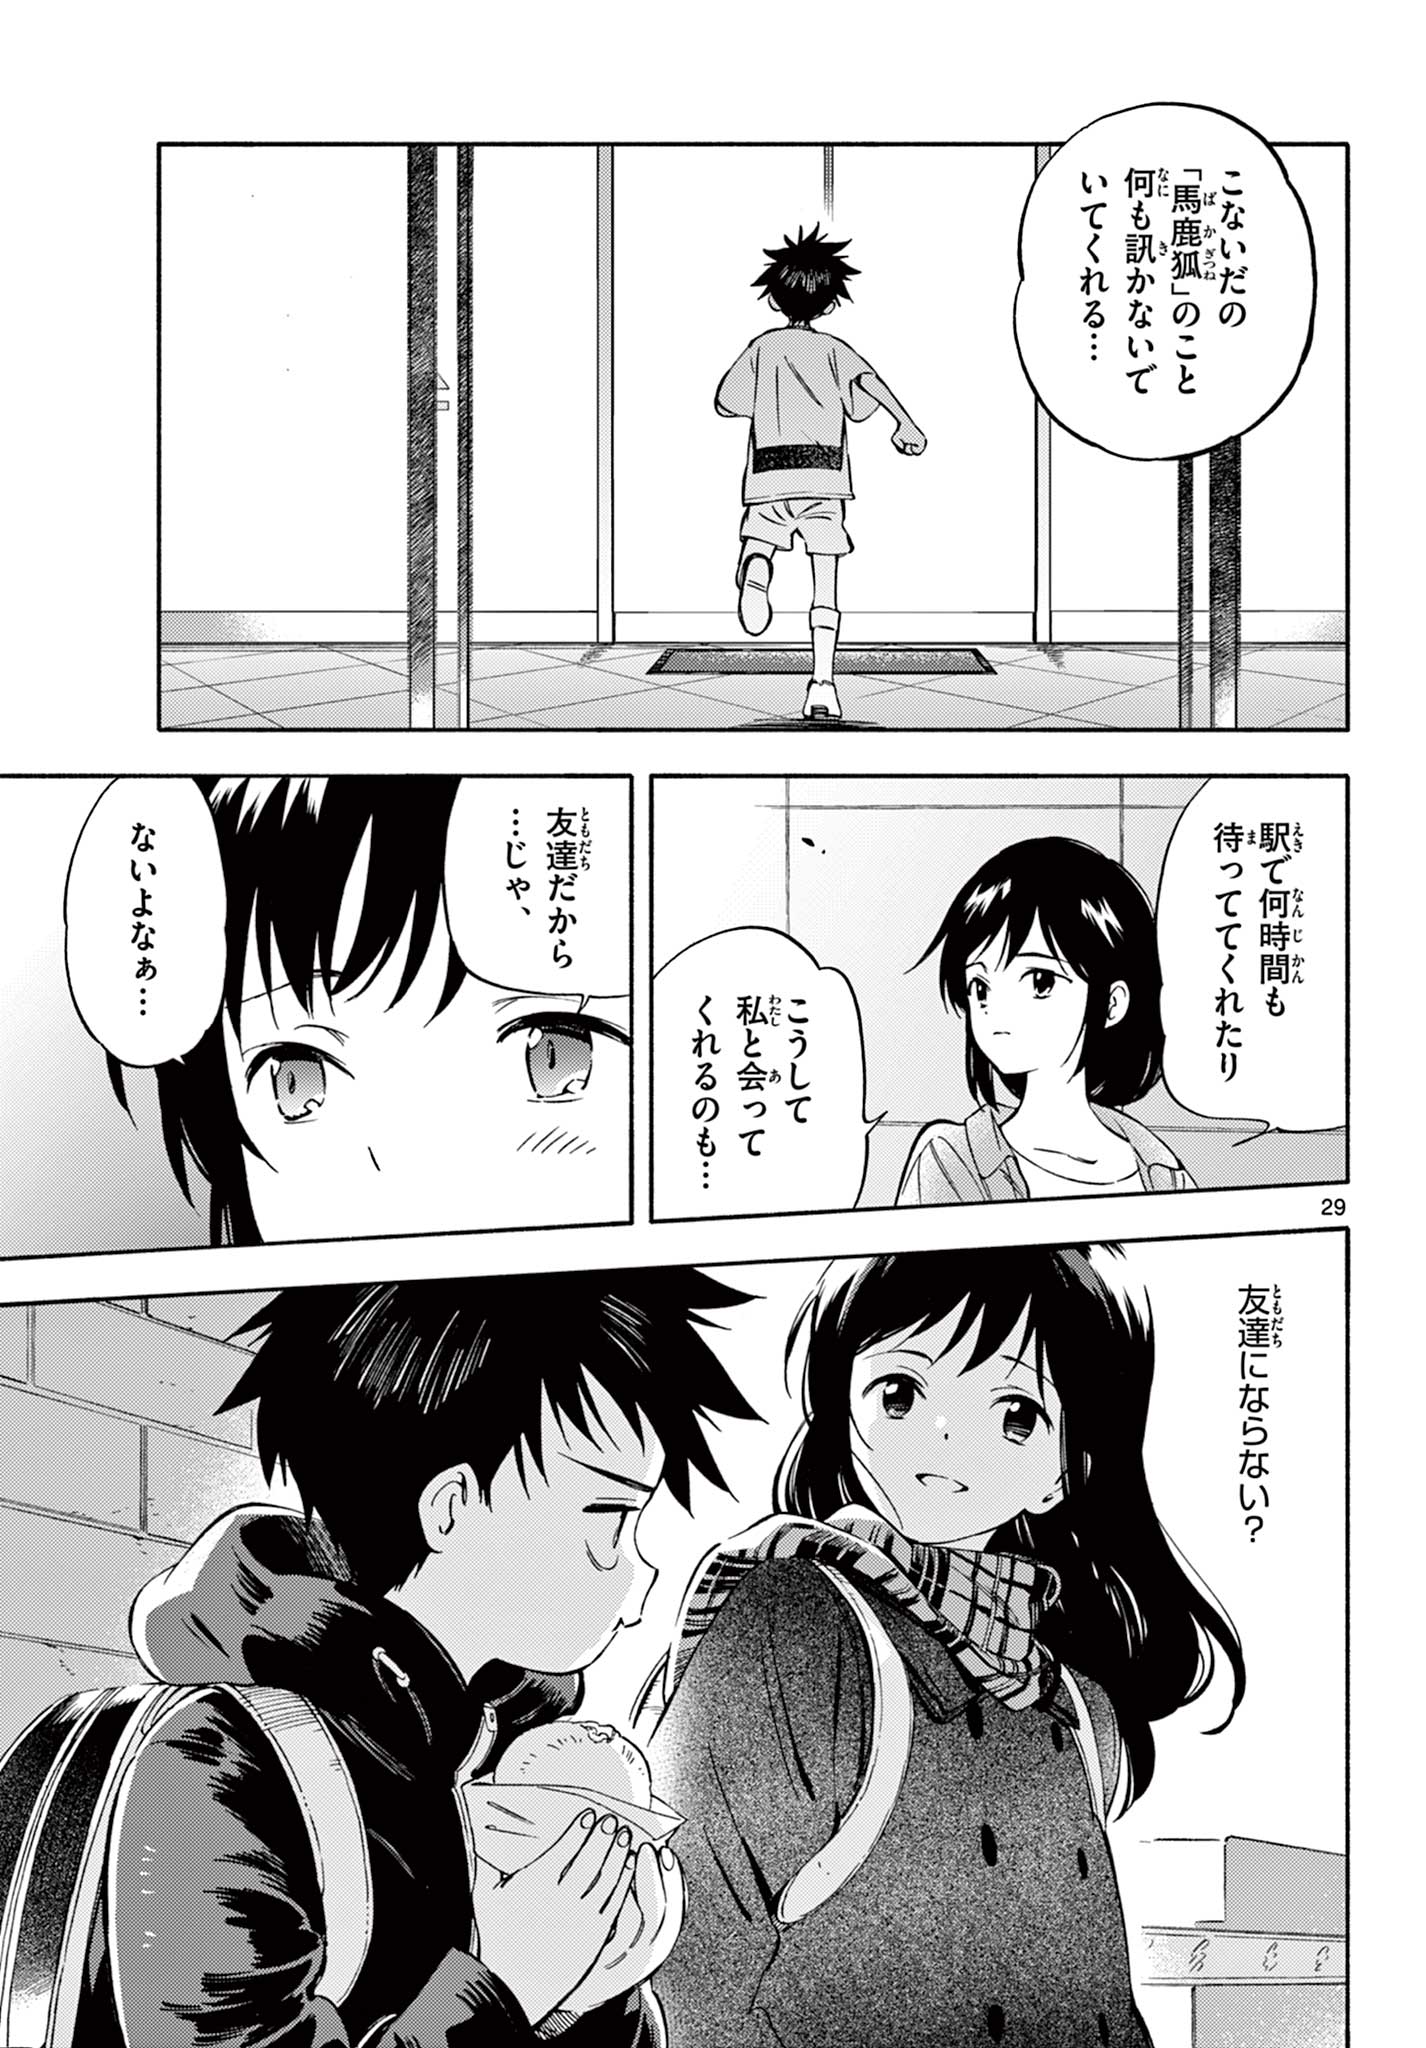 Nami no Shijima no Horizont - Chapter 15.2 - Page 14